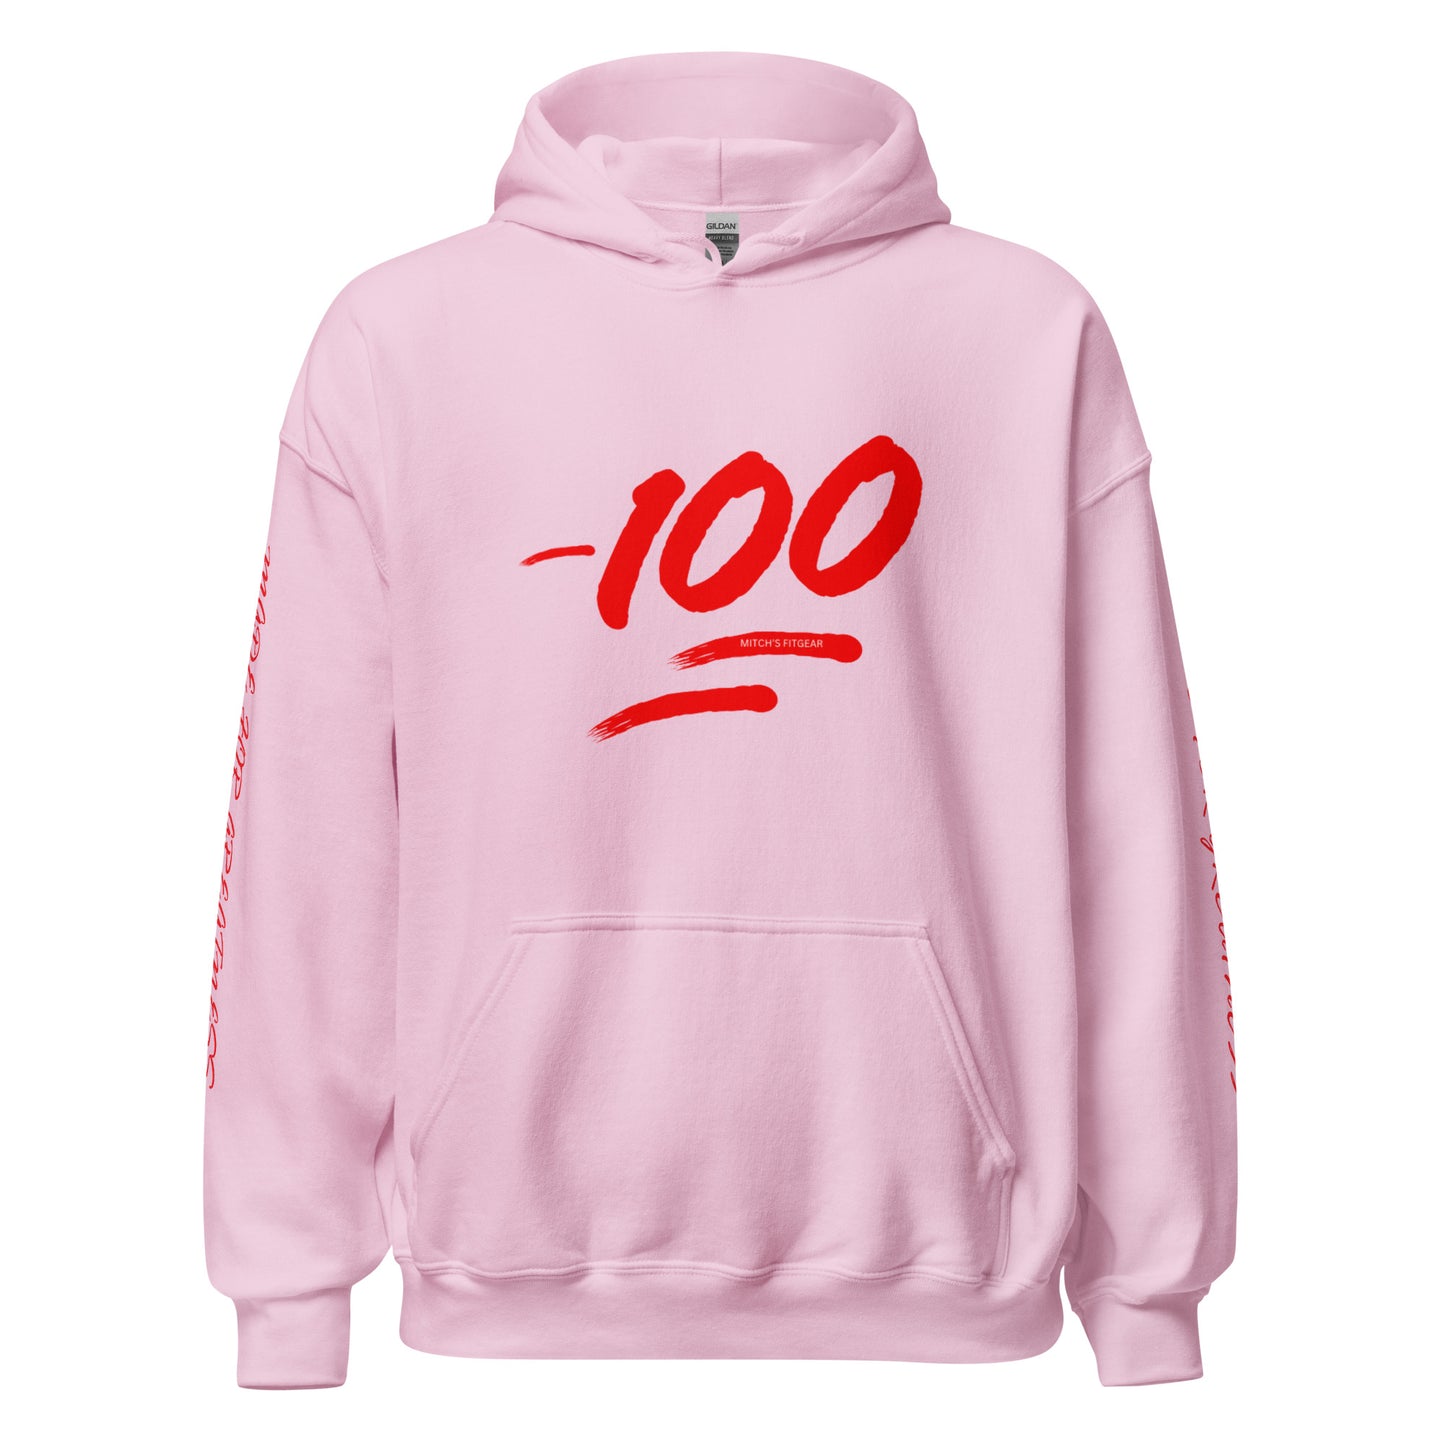 -100 = Move 100 Hoodie